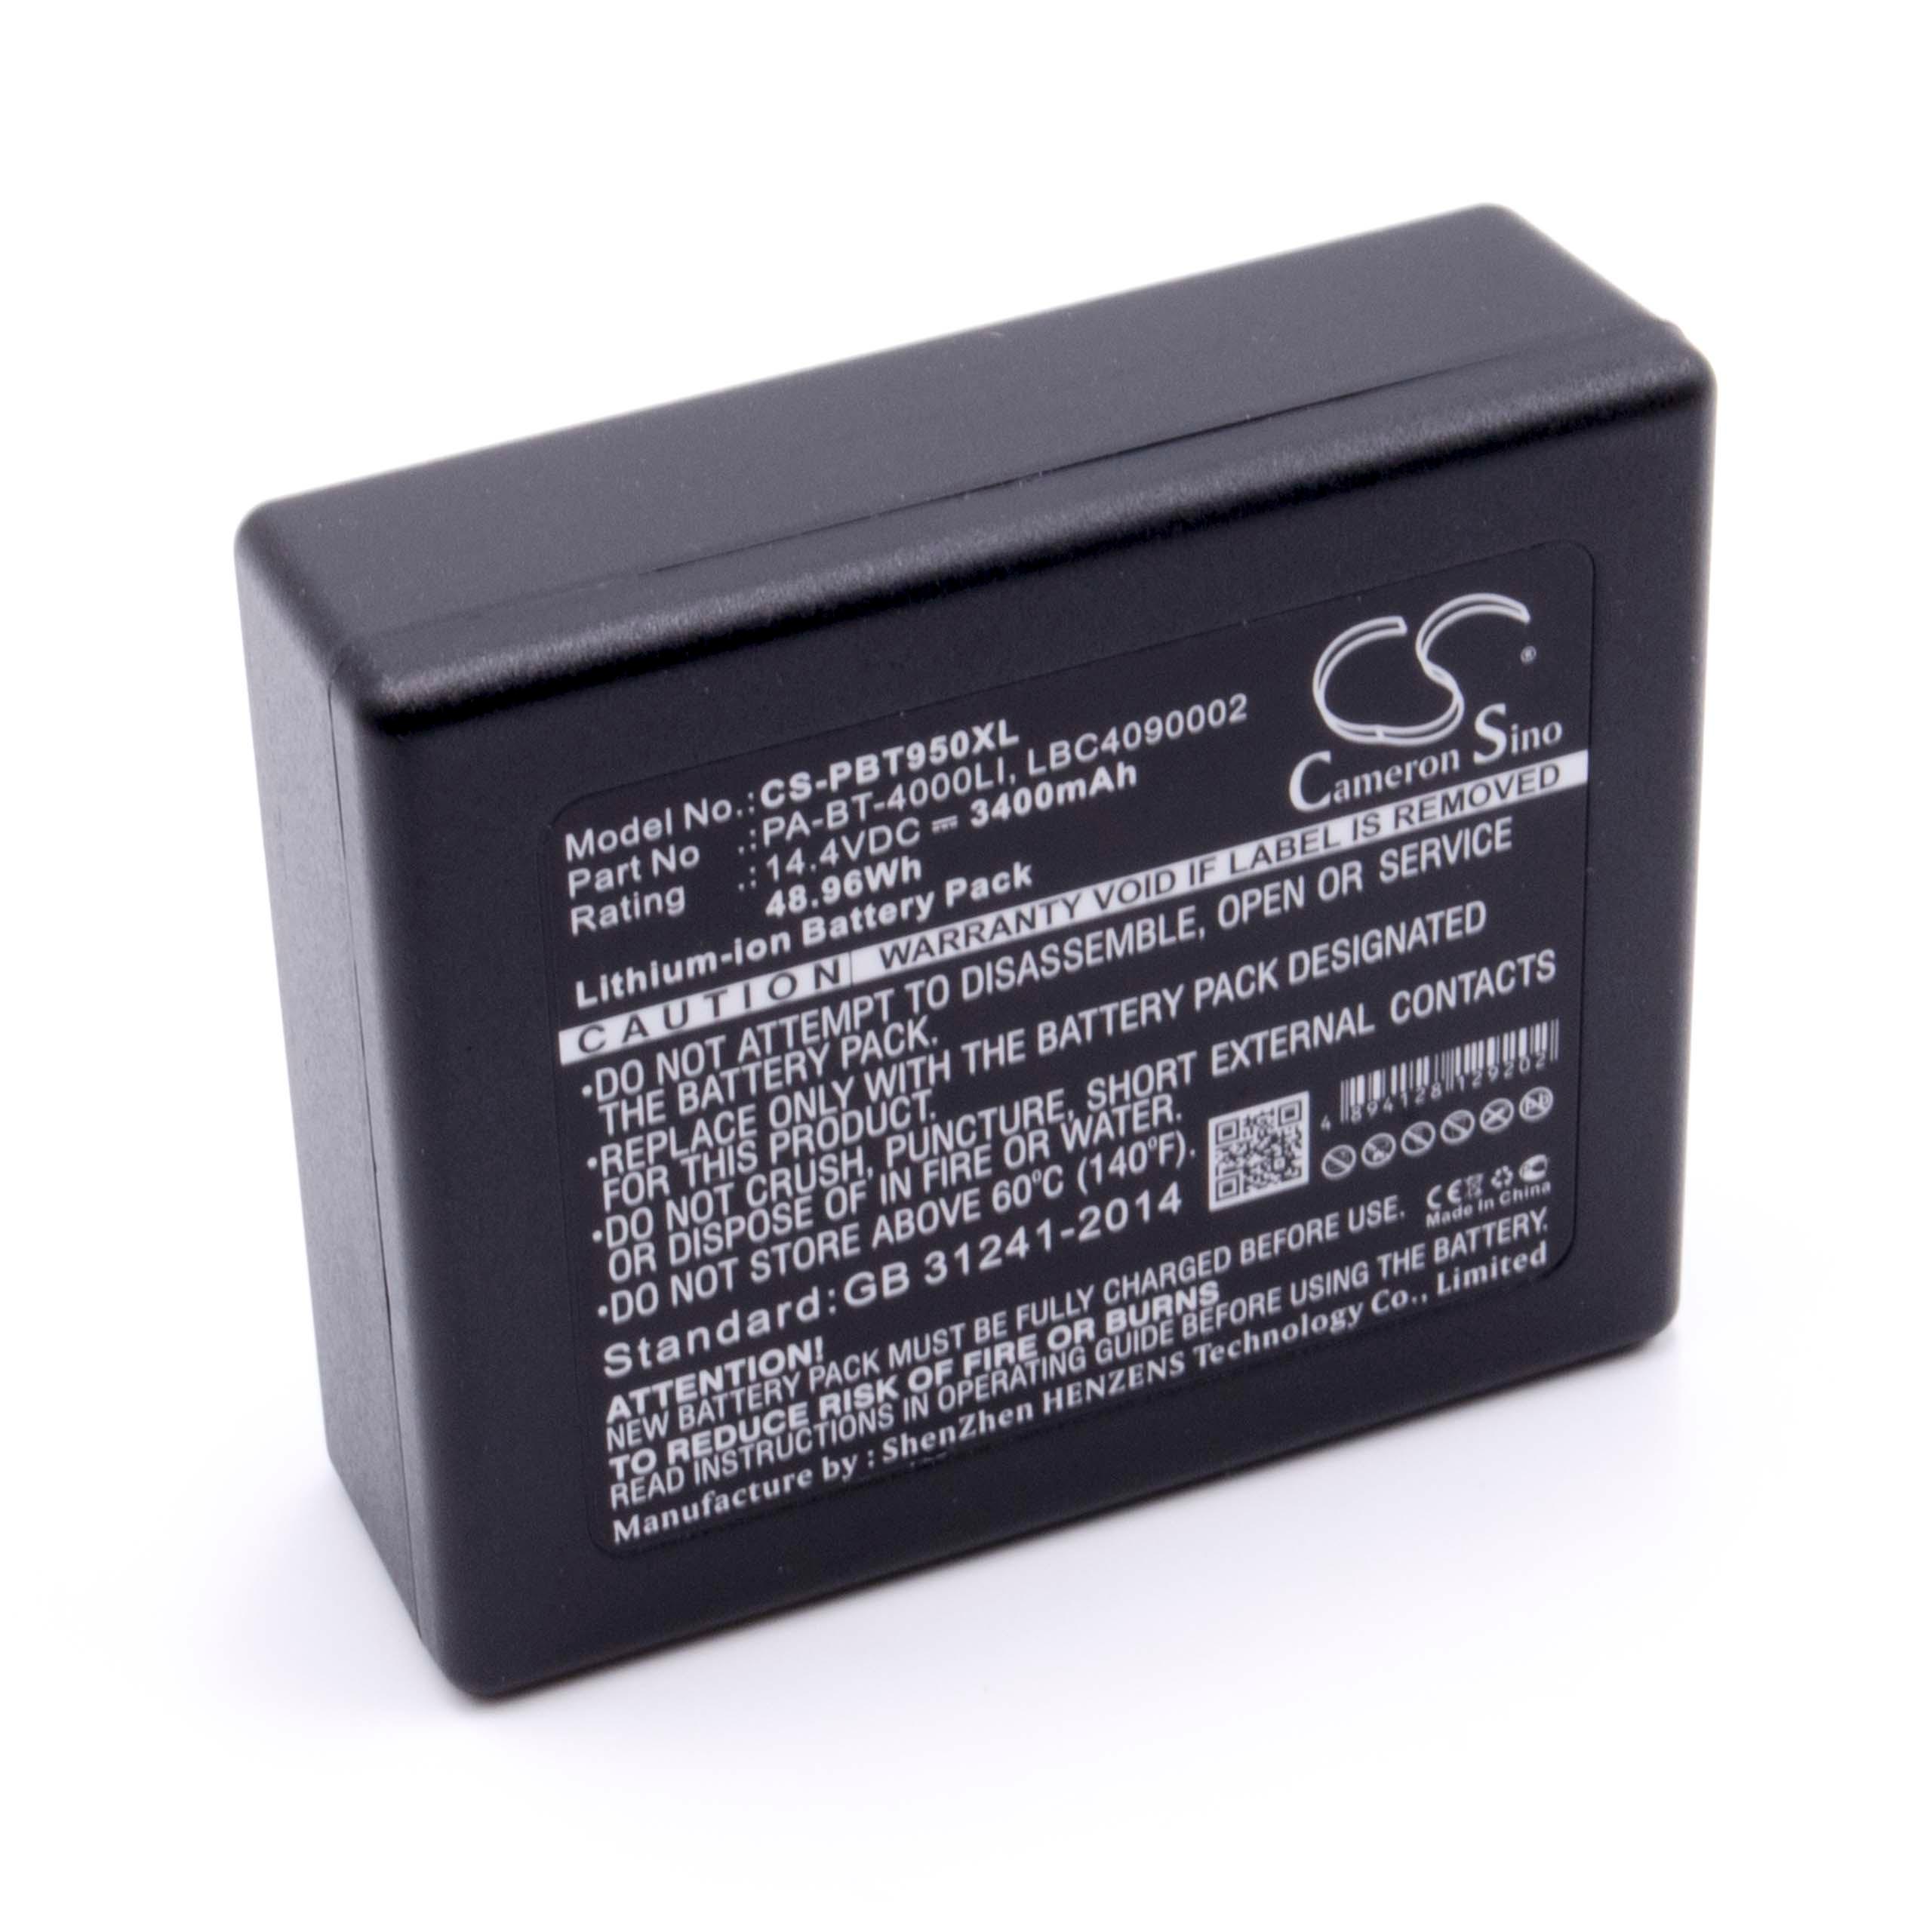 Batería reemplaza Brother LBD709-001, HP25B, LBC4090002 para impresora Brother - 3400 mAh 14,4 V Li-Ion